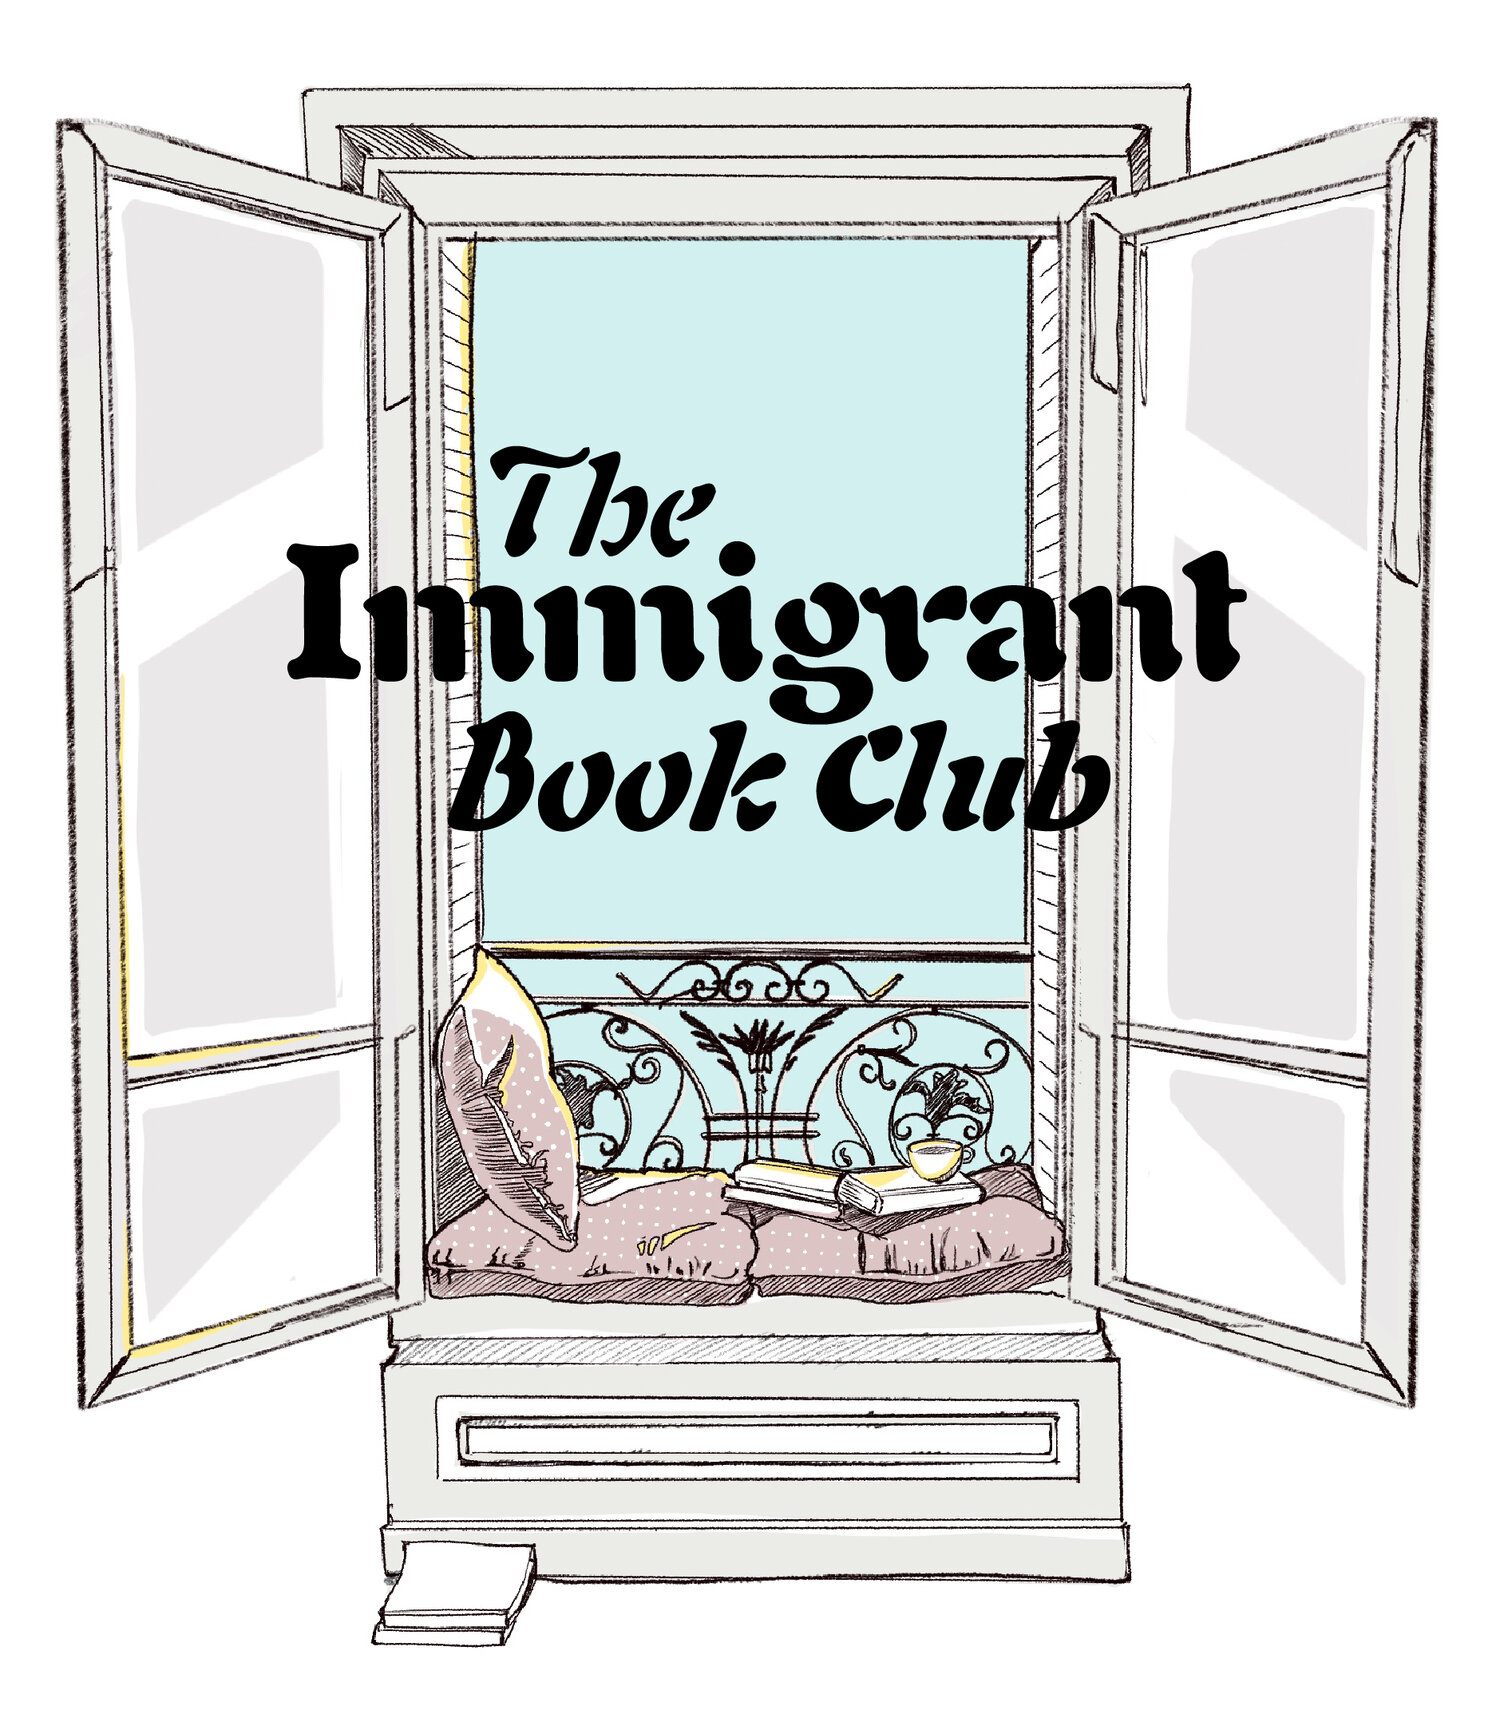 The Immigrant Book Club